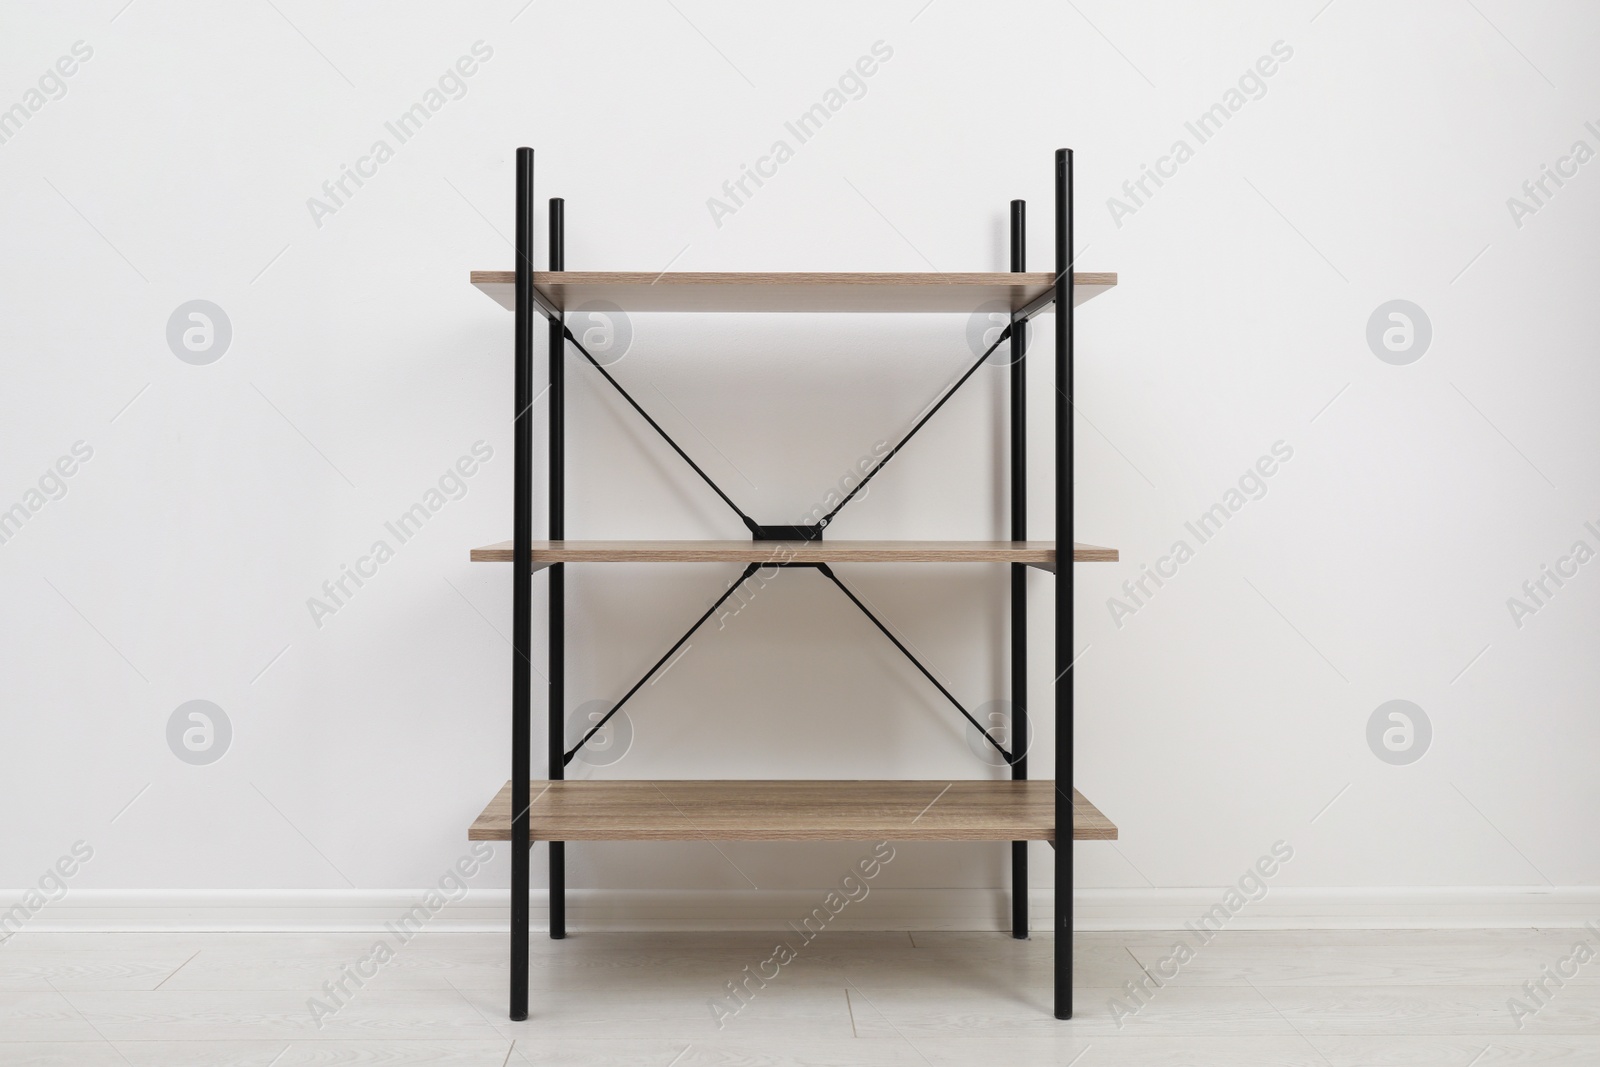 Photo of Modern wooden shelves unit at light wall